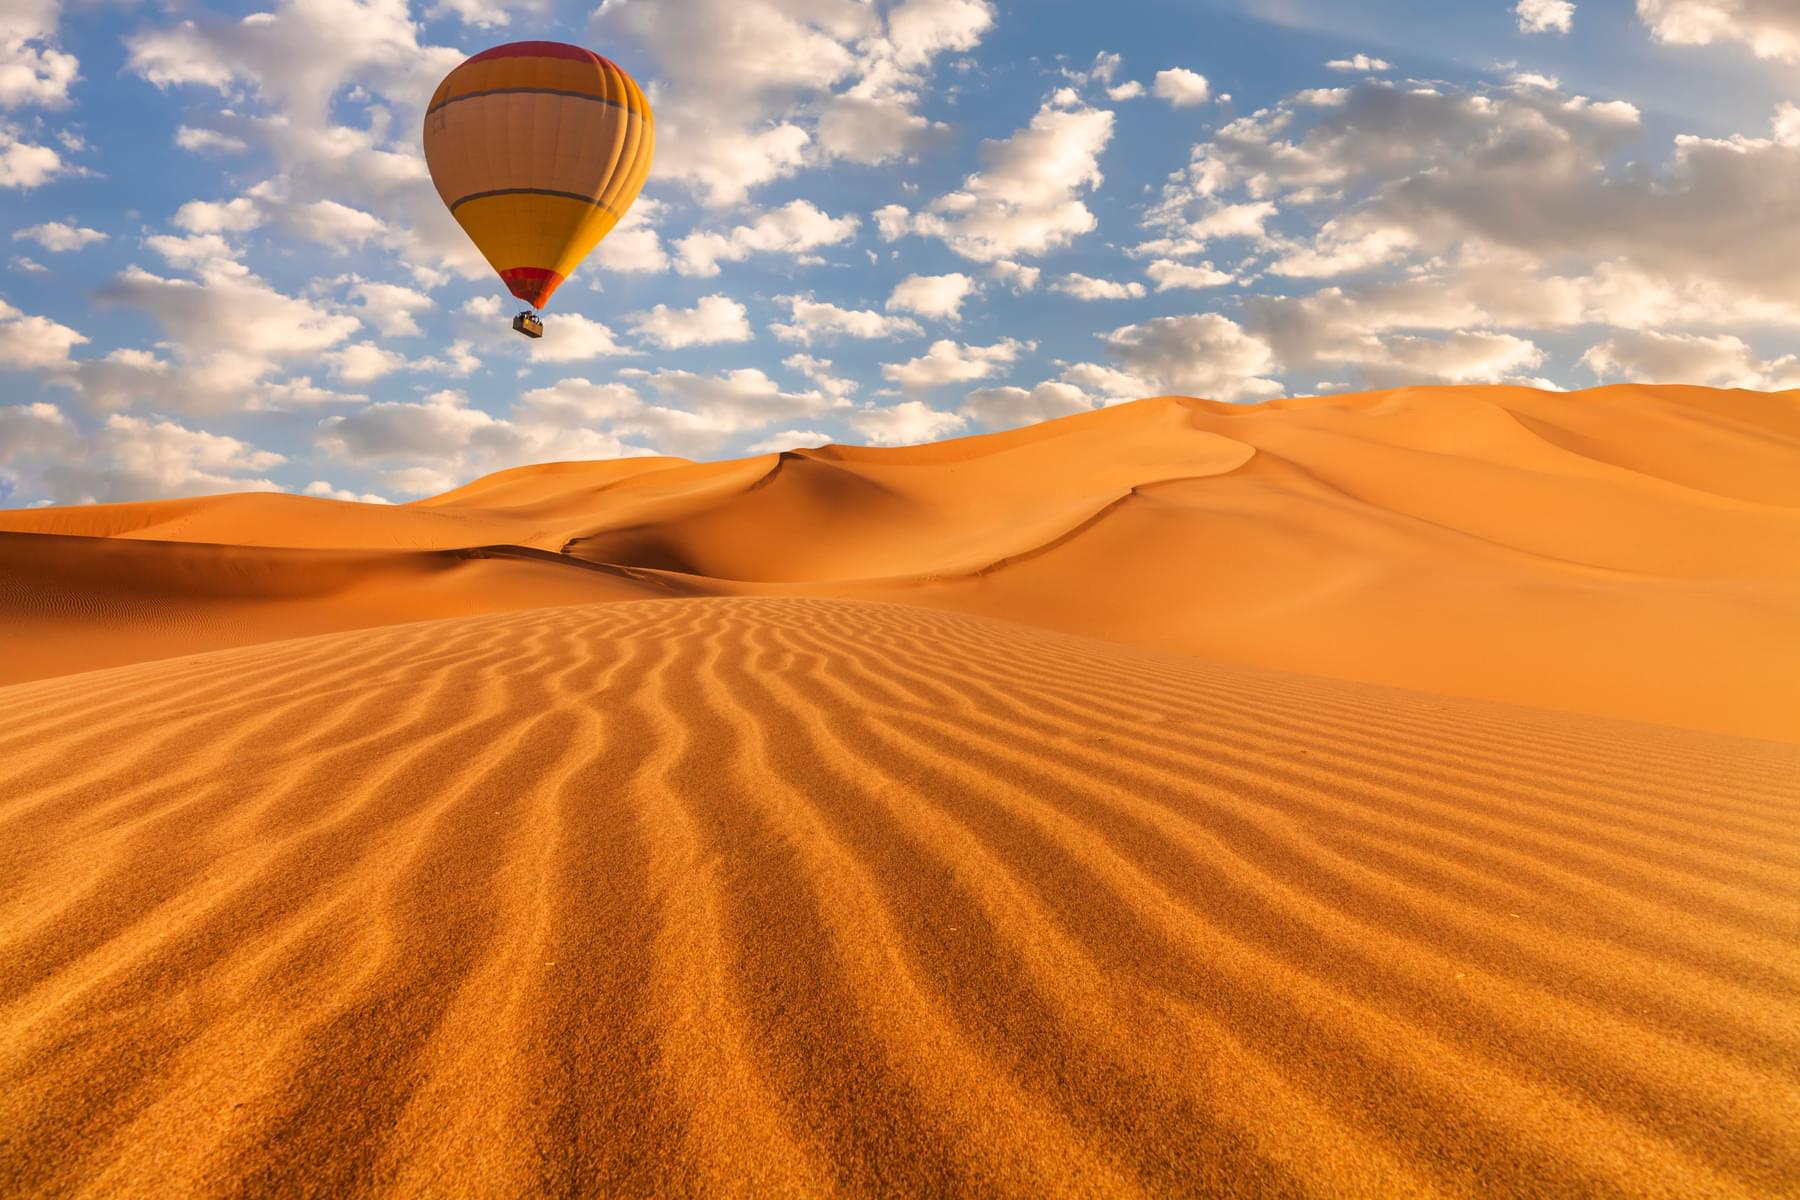 Best Time To Go For Hot Air Balloon Dubai